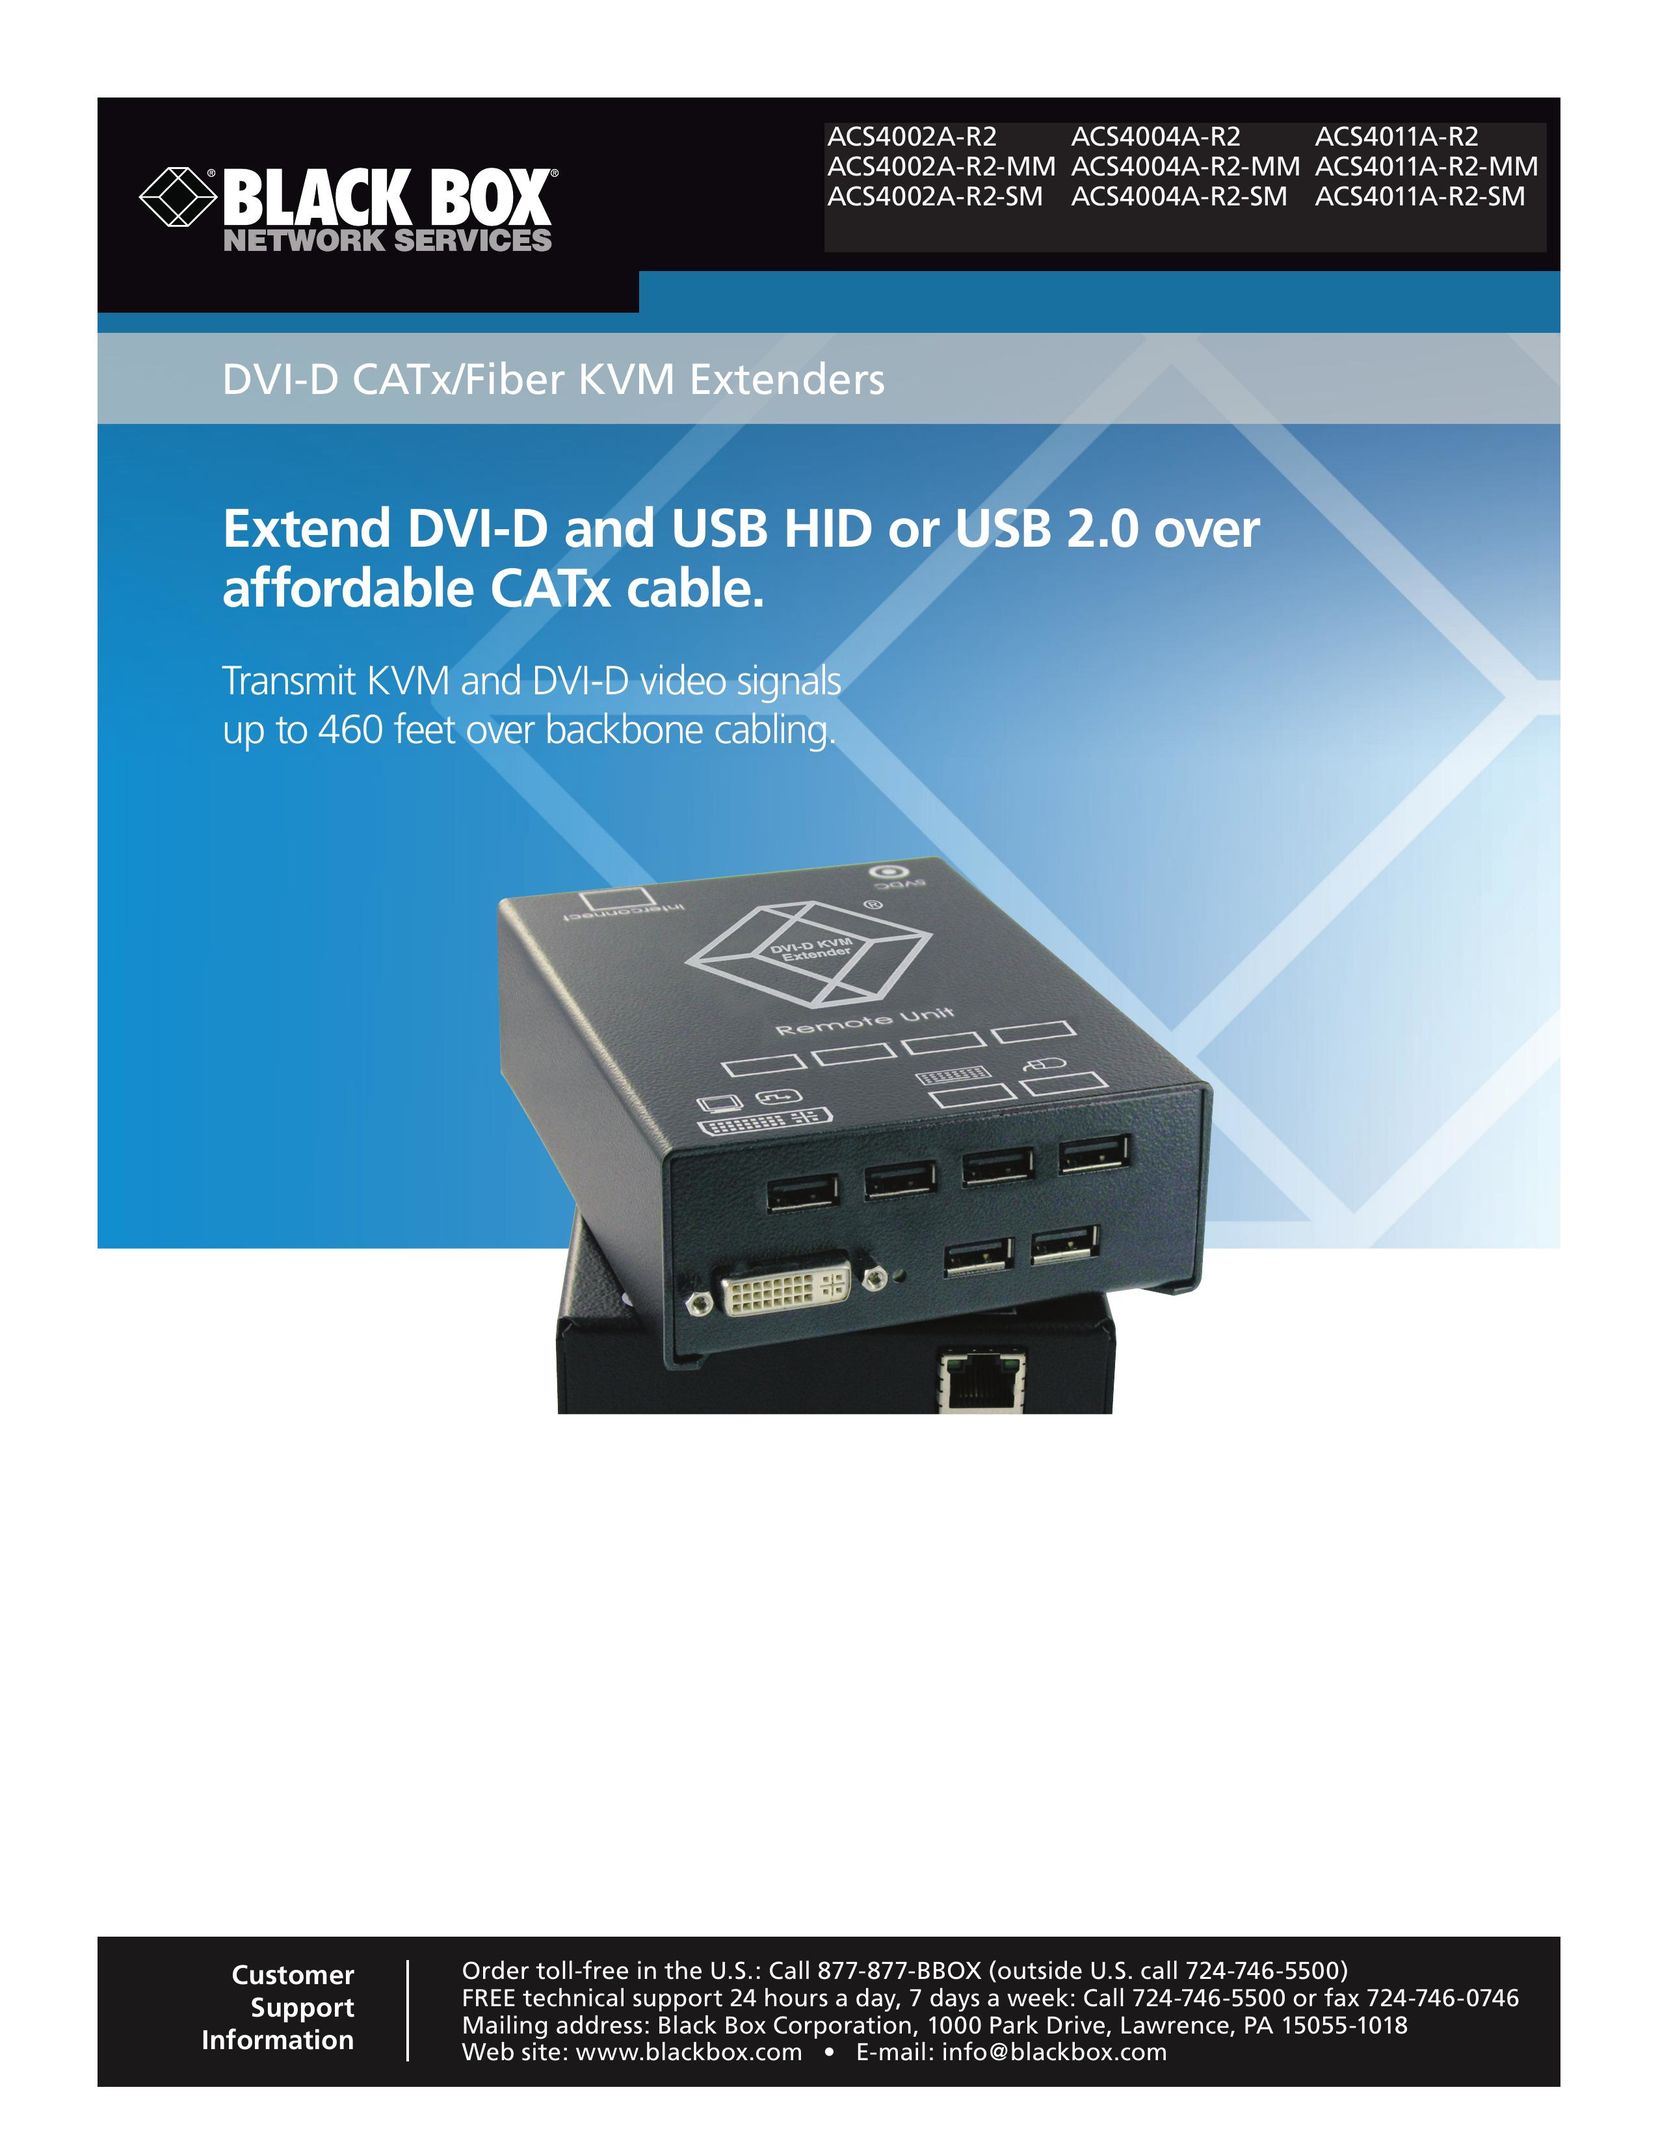 Black Box ACS4002A-R2-SM Network Hardware User Manual